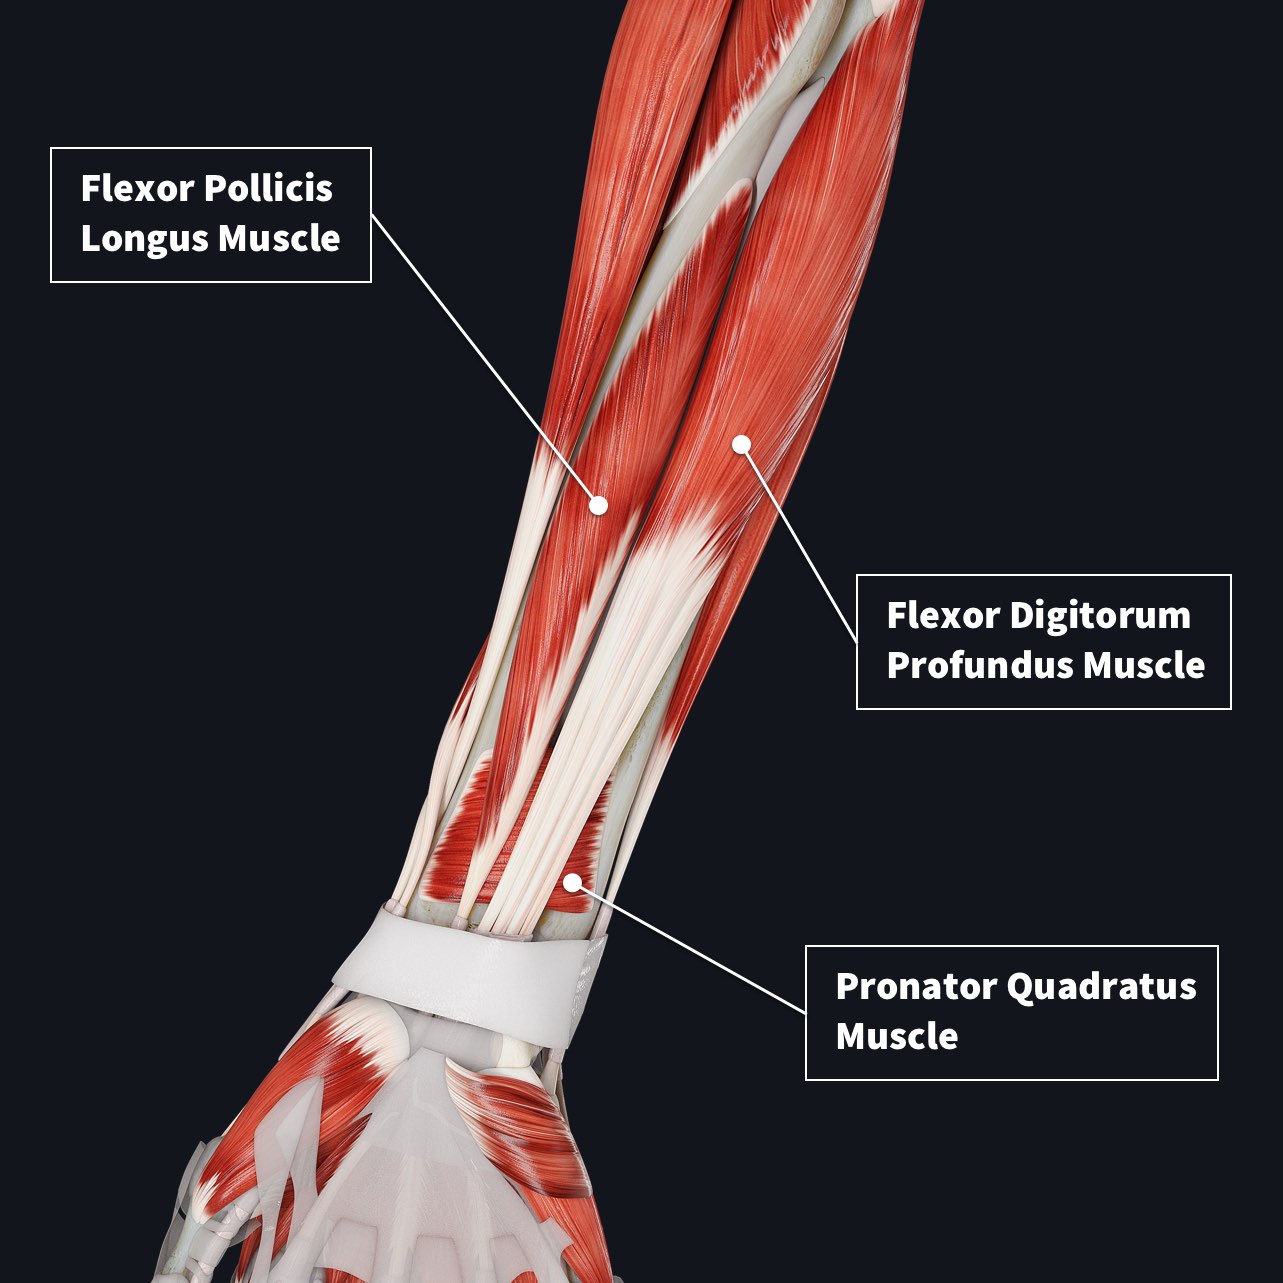 The anterior compartment of the forearm showing the deep muscles including the Flexor Pollicis Longus, Flexor Digitorum Profundus and the Pronator Quadratus